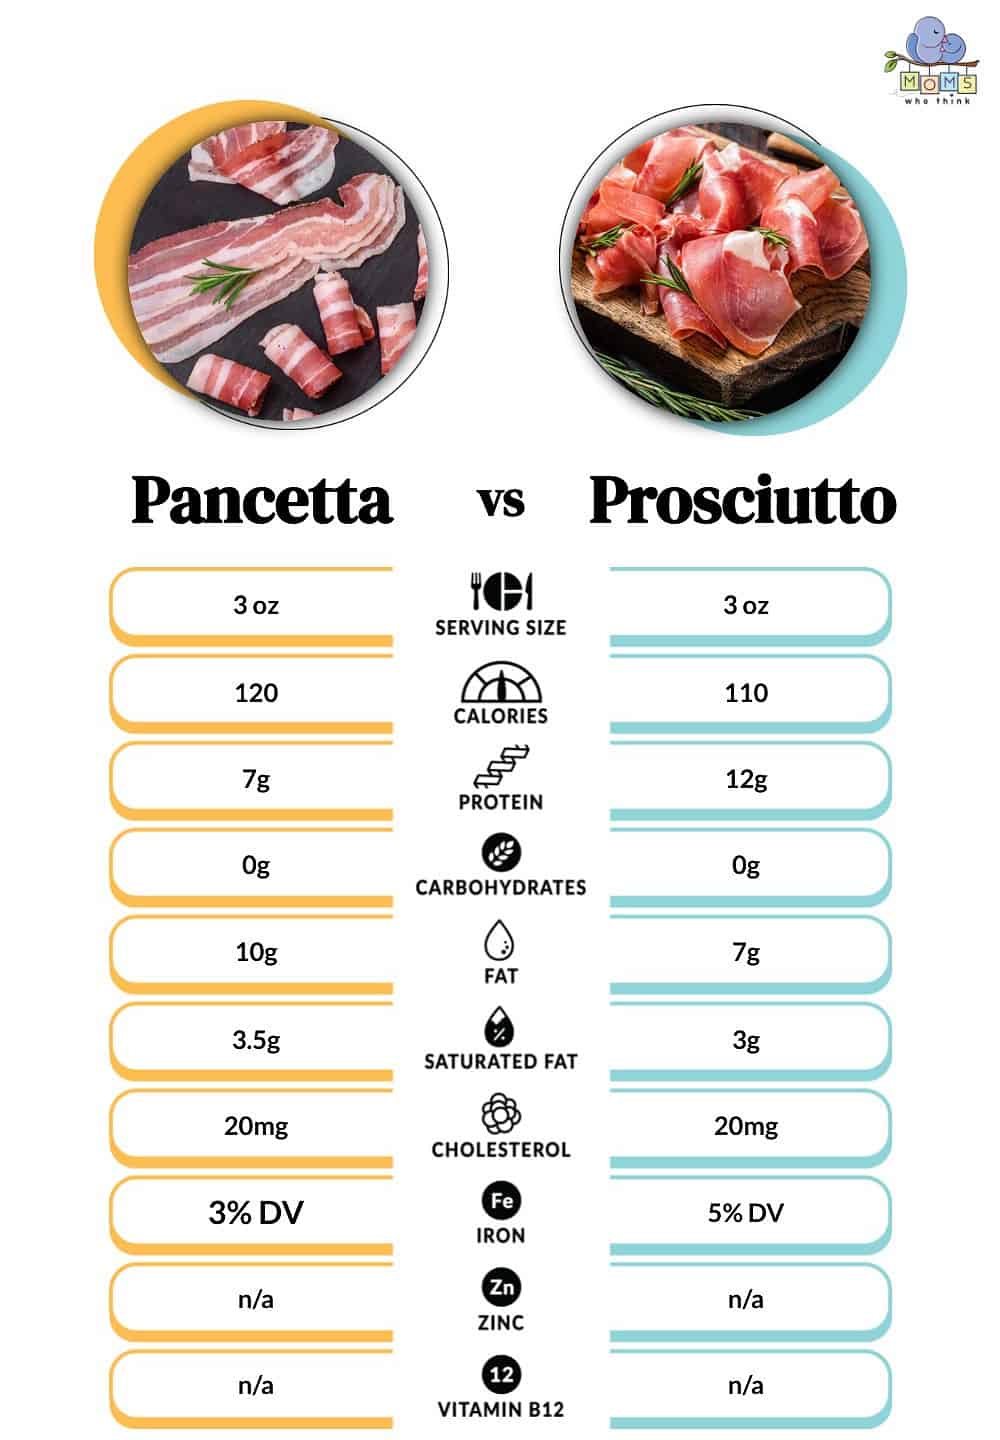 Pancetta vs Prosciutto Nutritional Facts